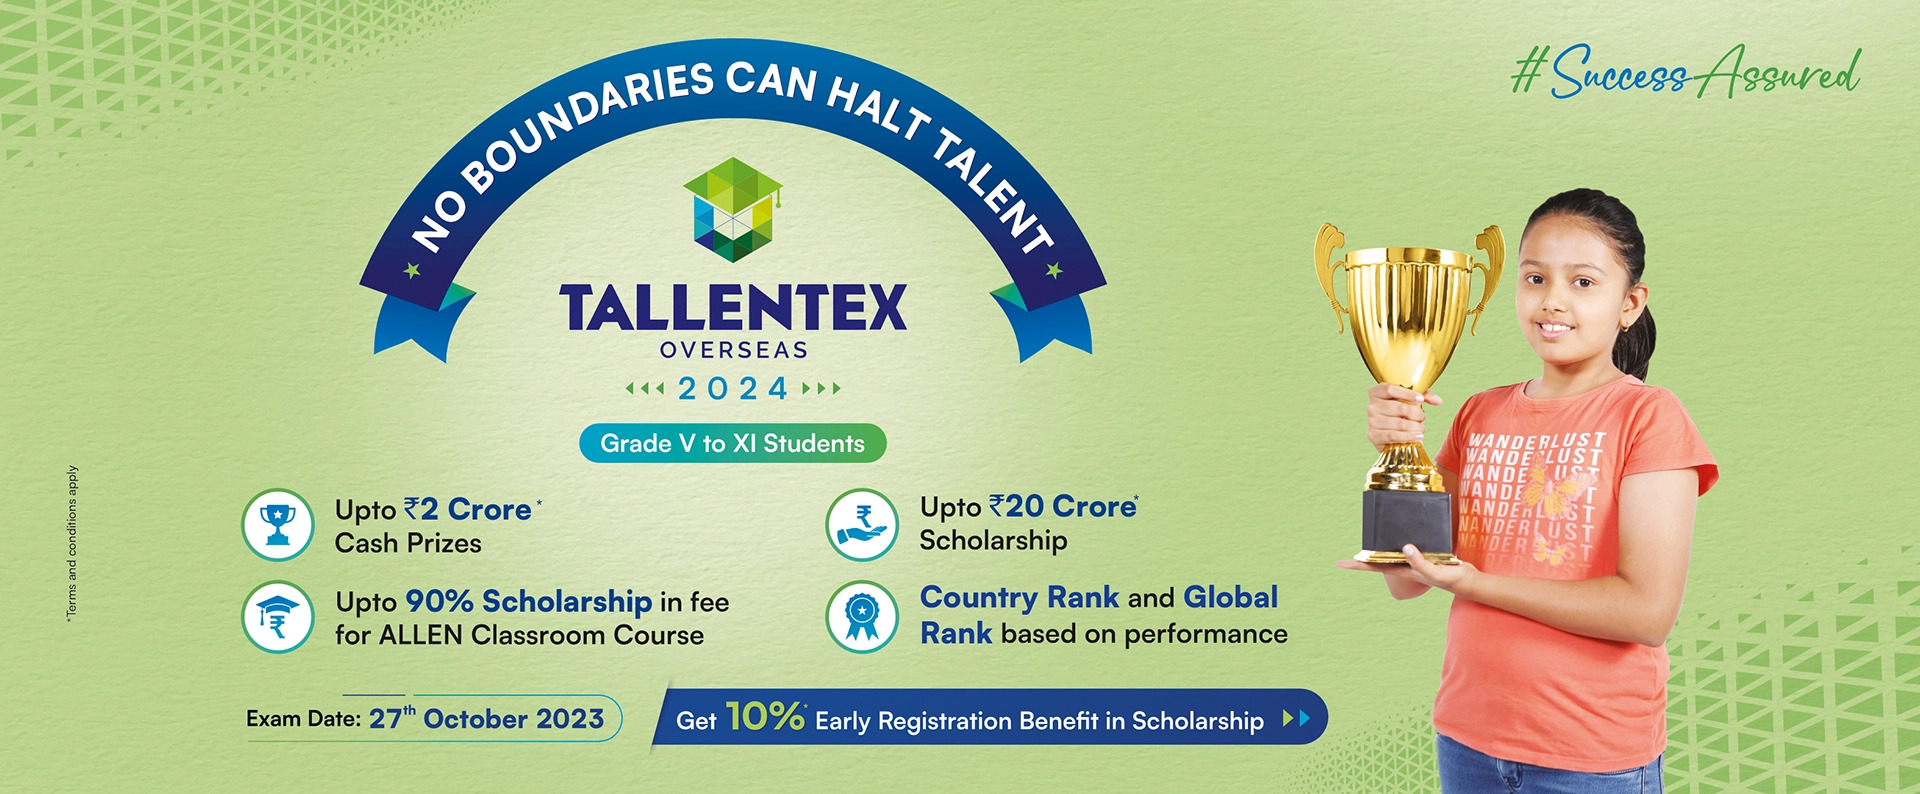 TALLENTEX Overseas 2024 - The Biggest Talent- Scholarship Exam in Gulf Countries, Dubai, Abu Dhabi, Sharjah,Dubai,United Arab Emirates